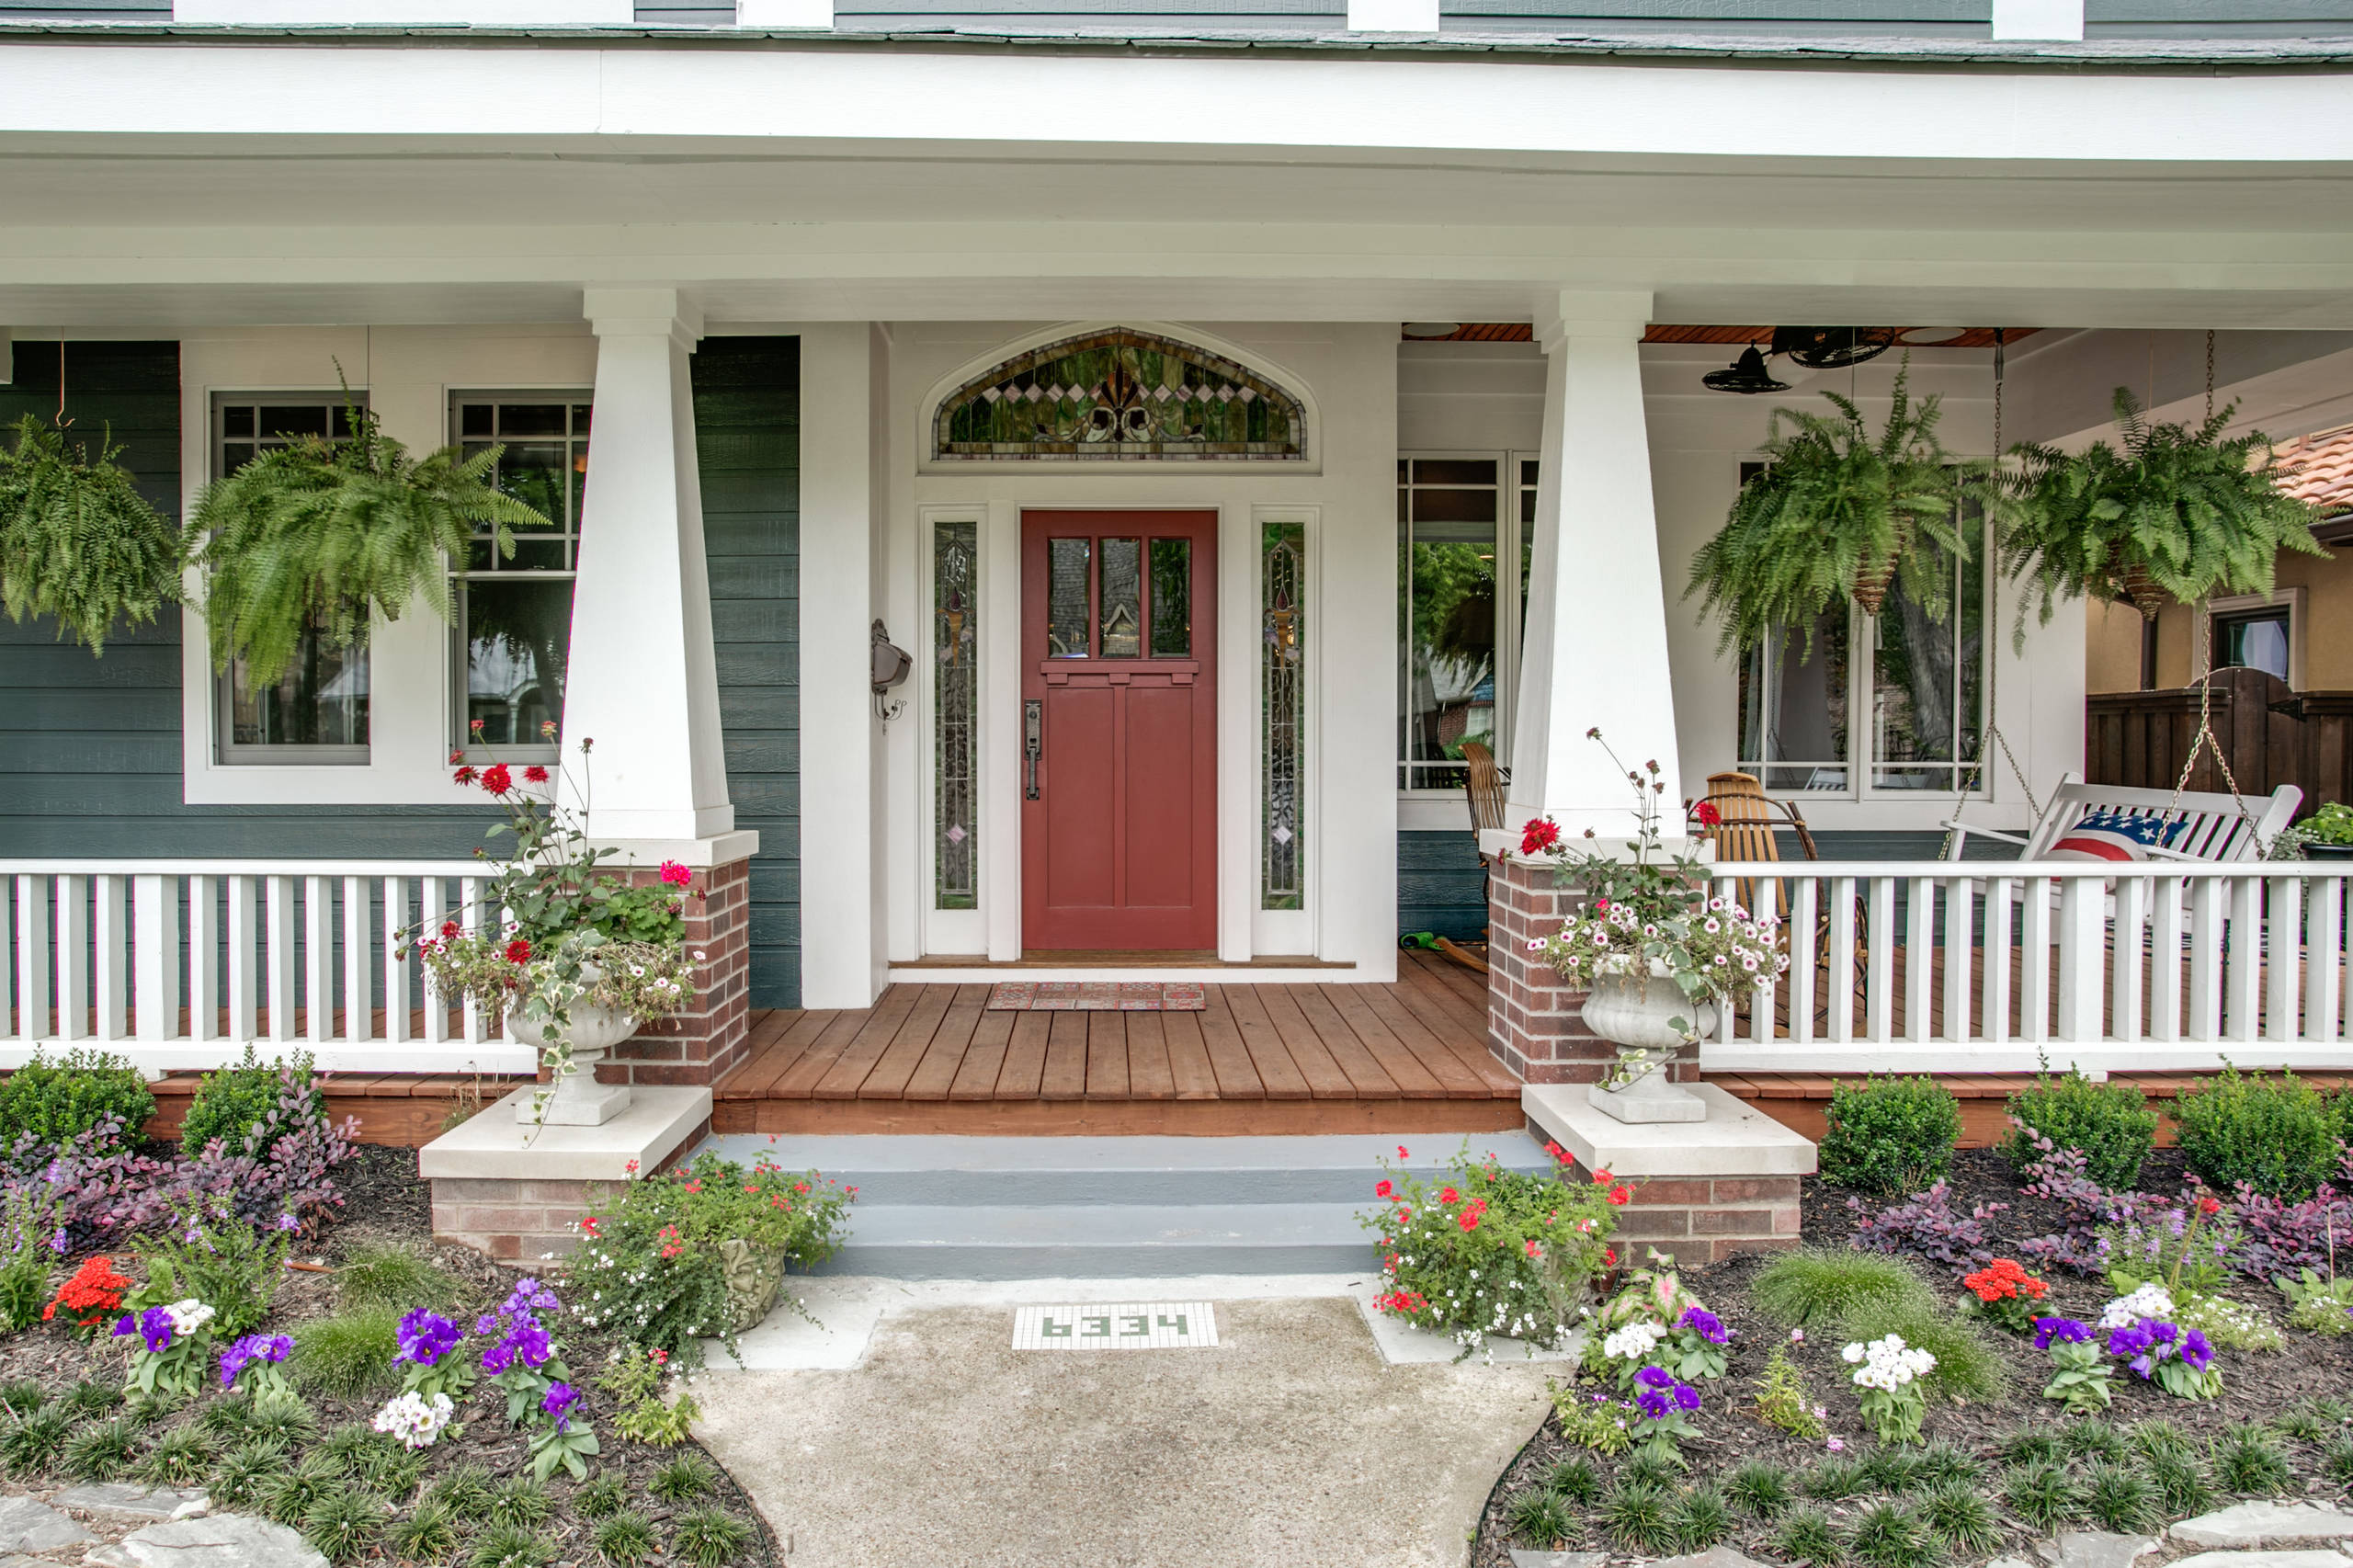 Modern Craftsman Summer Porch Decor Ideas - Cherished Bliss